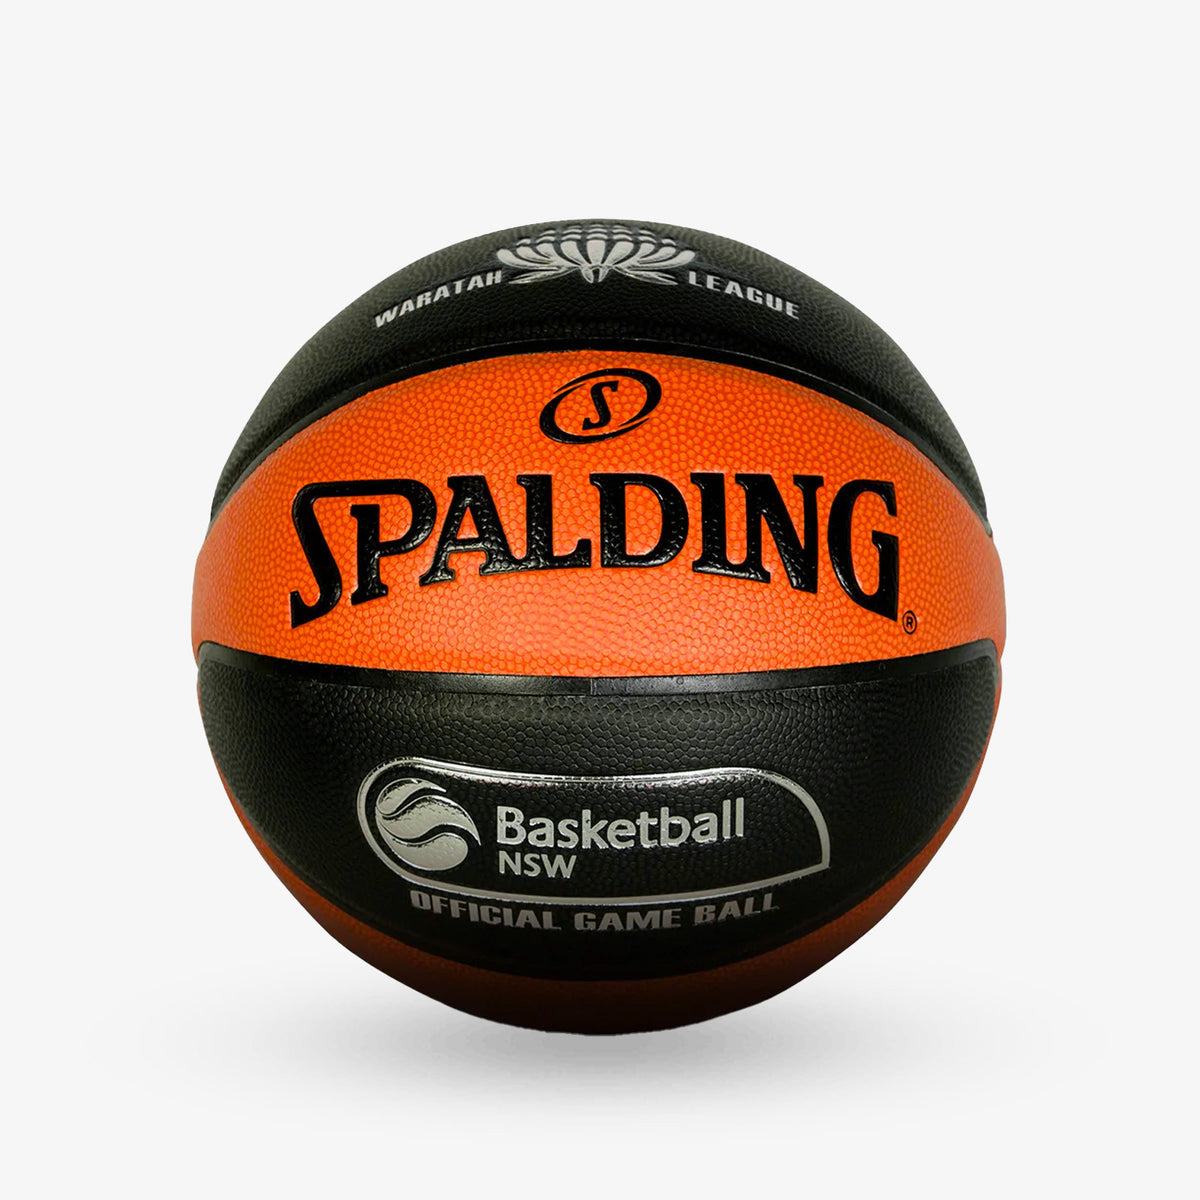 Spalding TF-1000 Legacy Indoor Basketball - Basketball NSW - Size 6